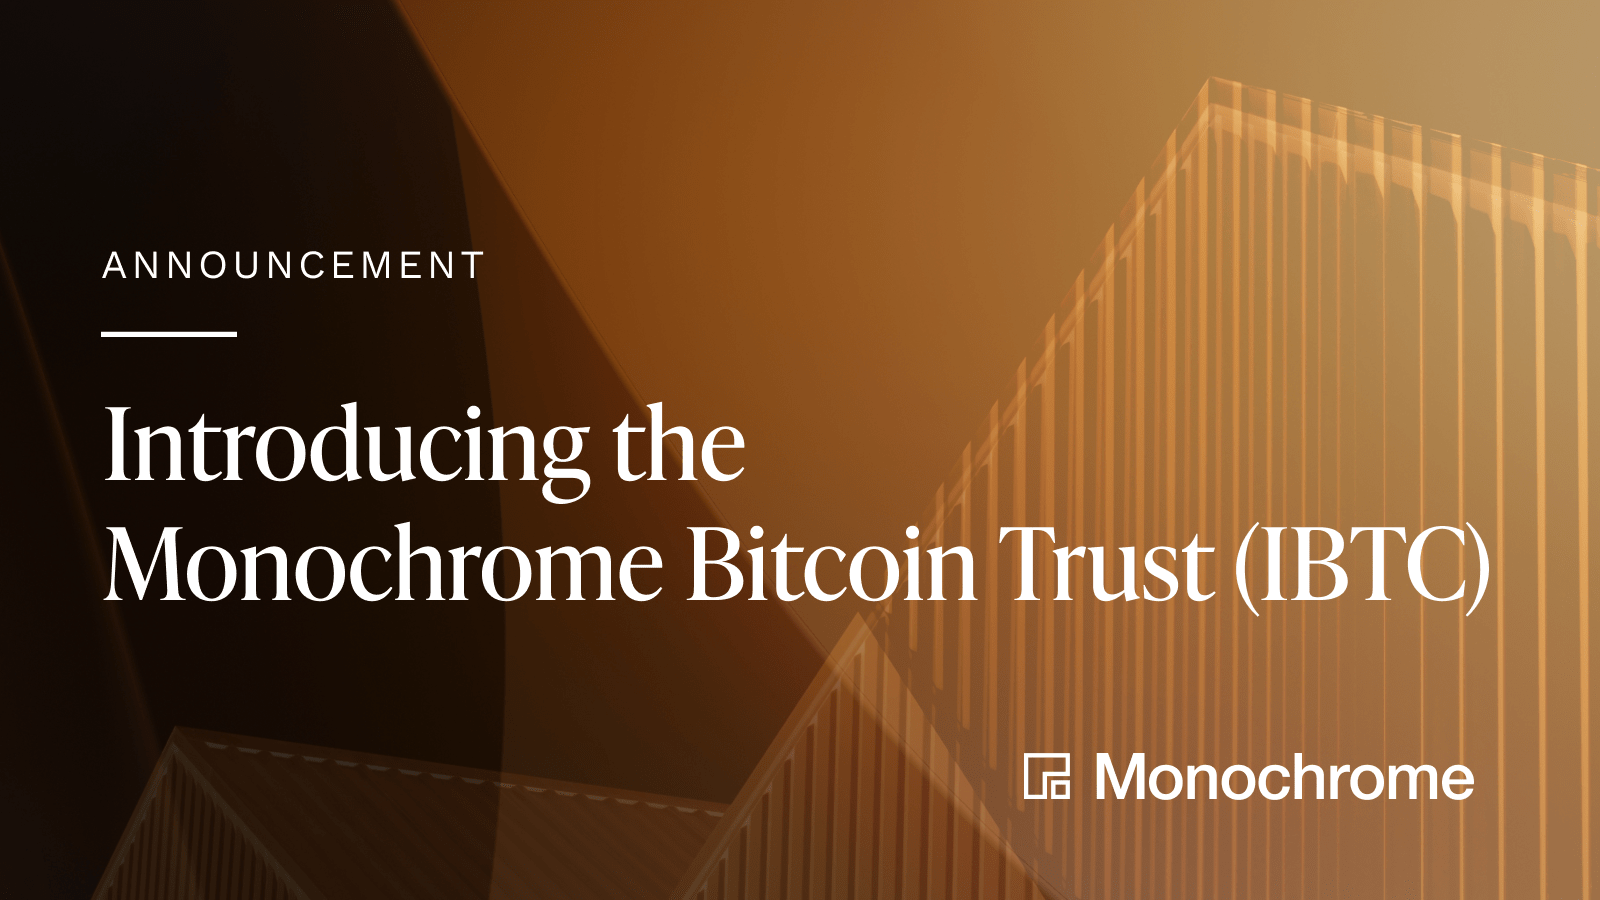 Monochrome Bitcoin Trust Launch_IBTC_1600x900.png